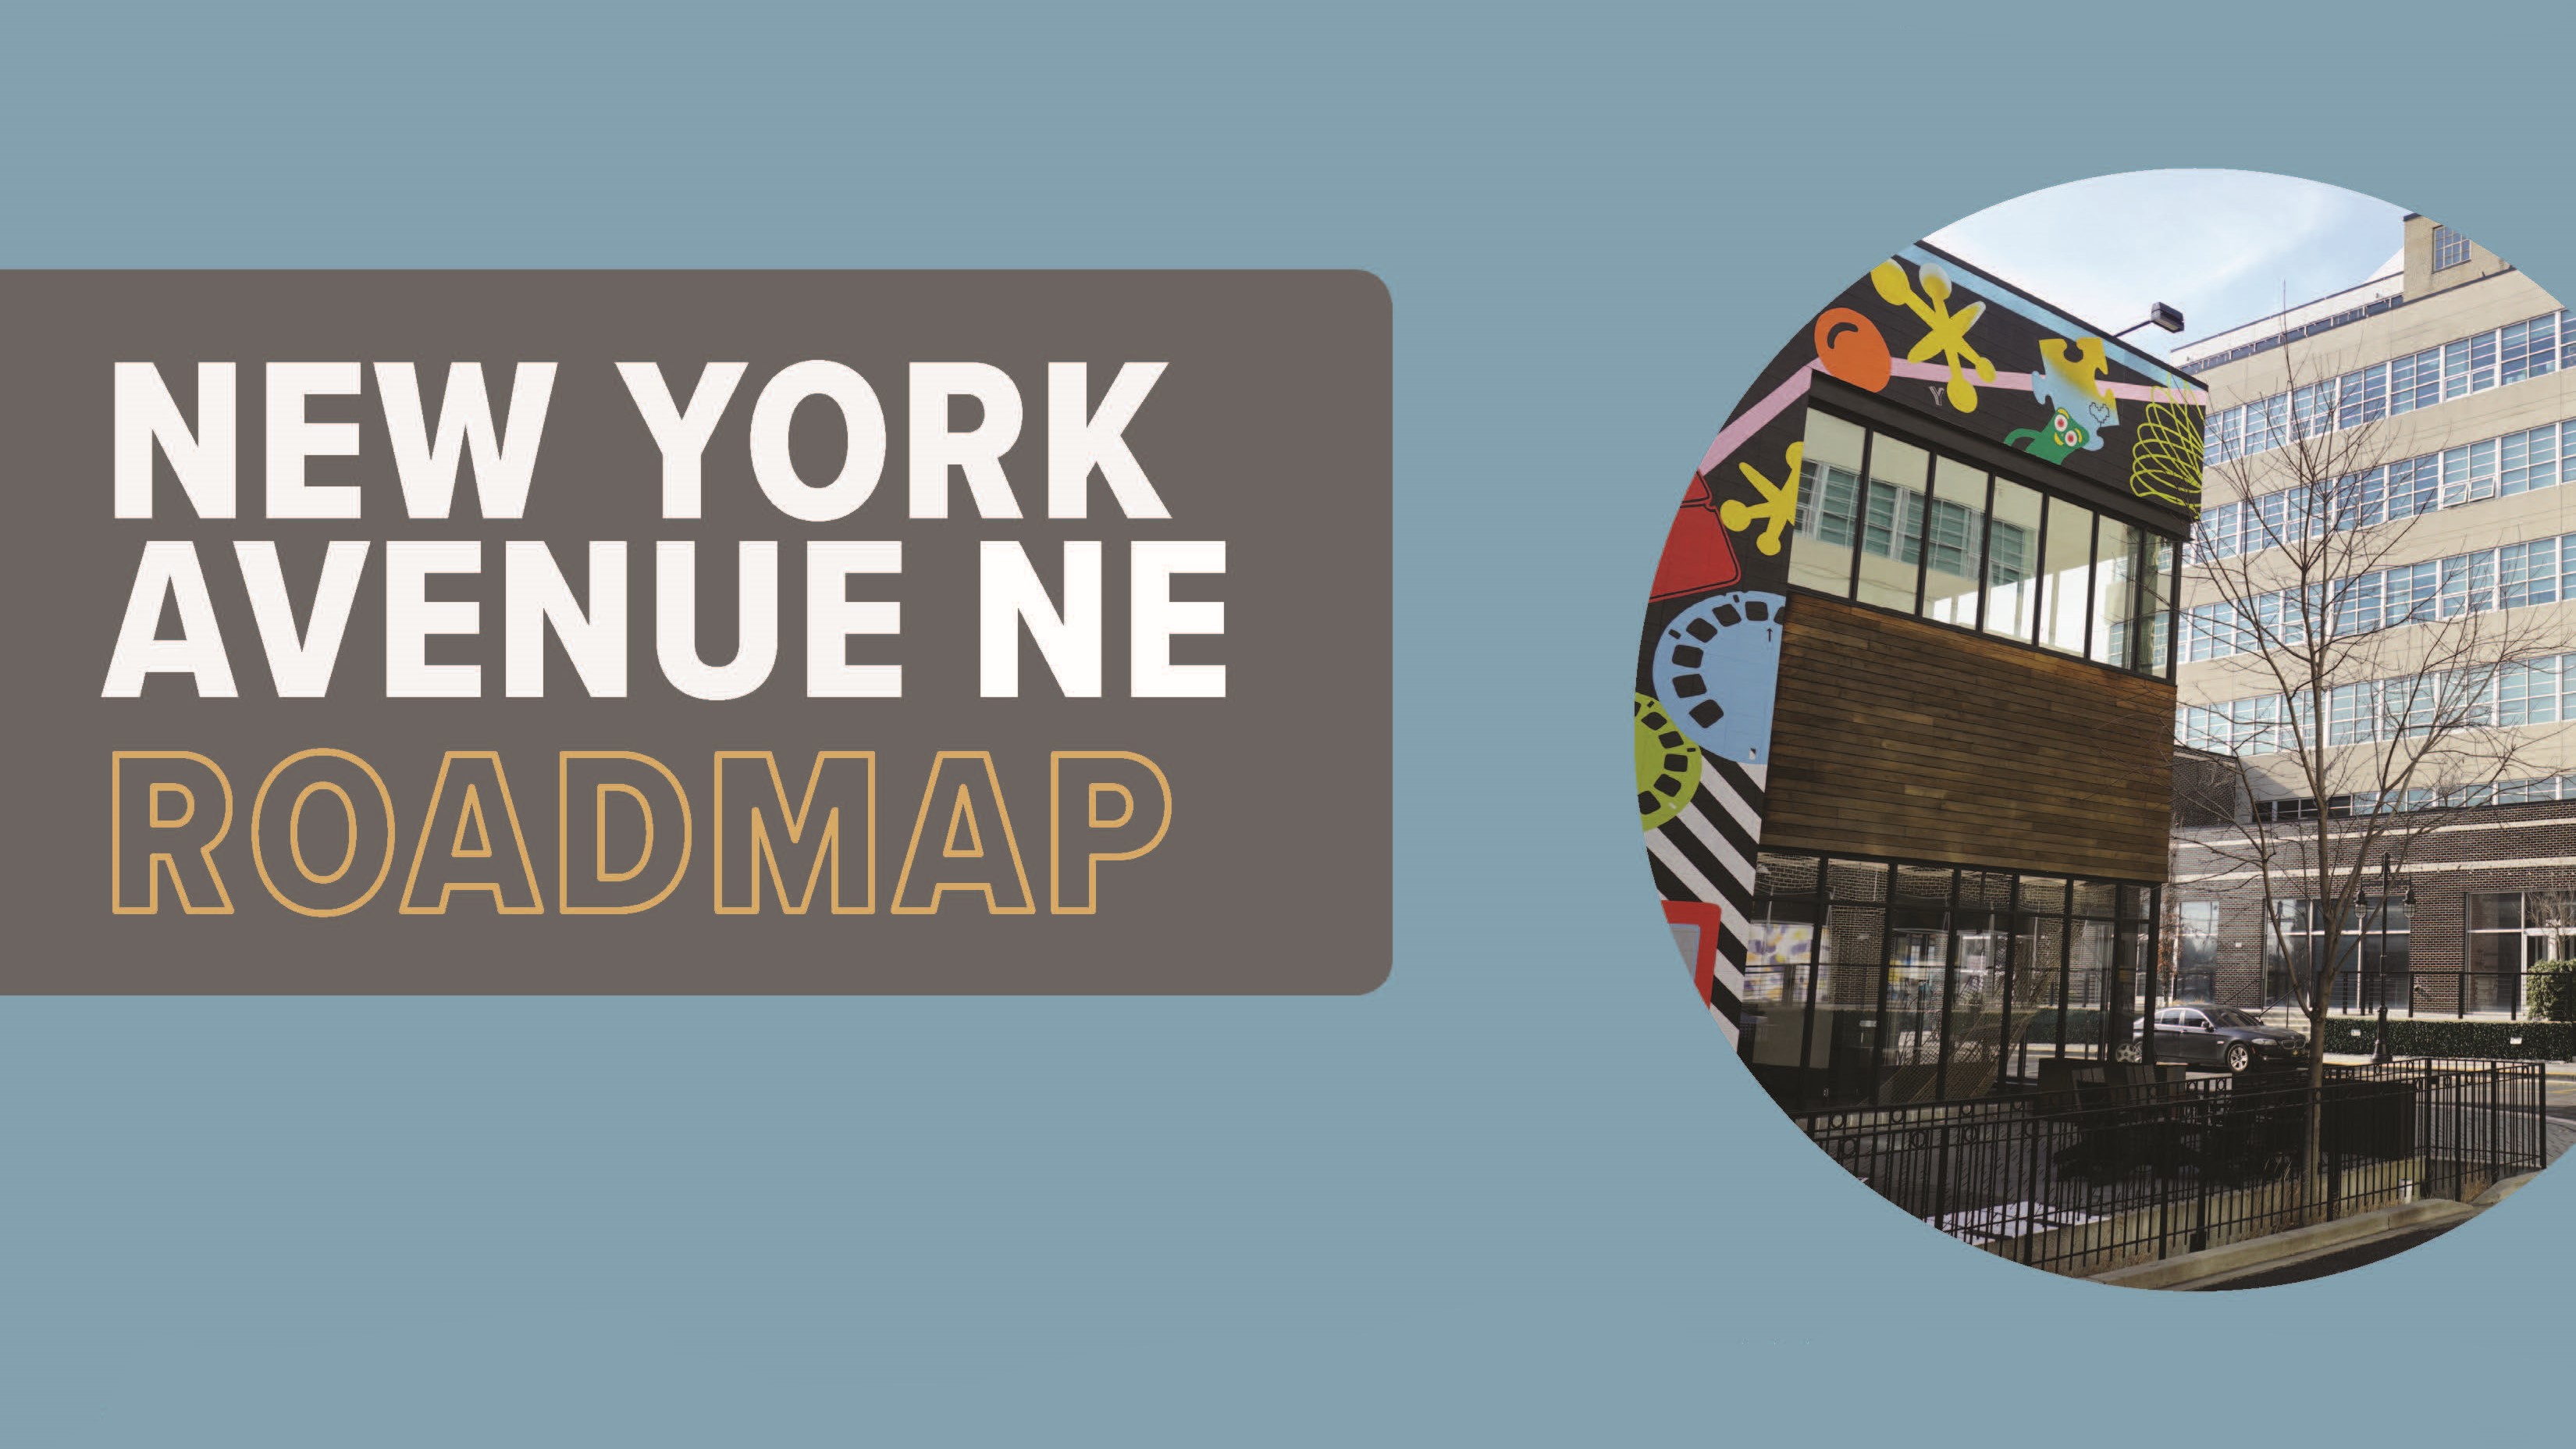 New York Avenue NE Roadmap cover image